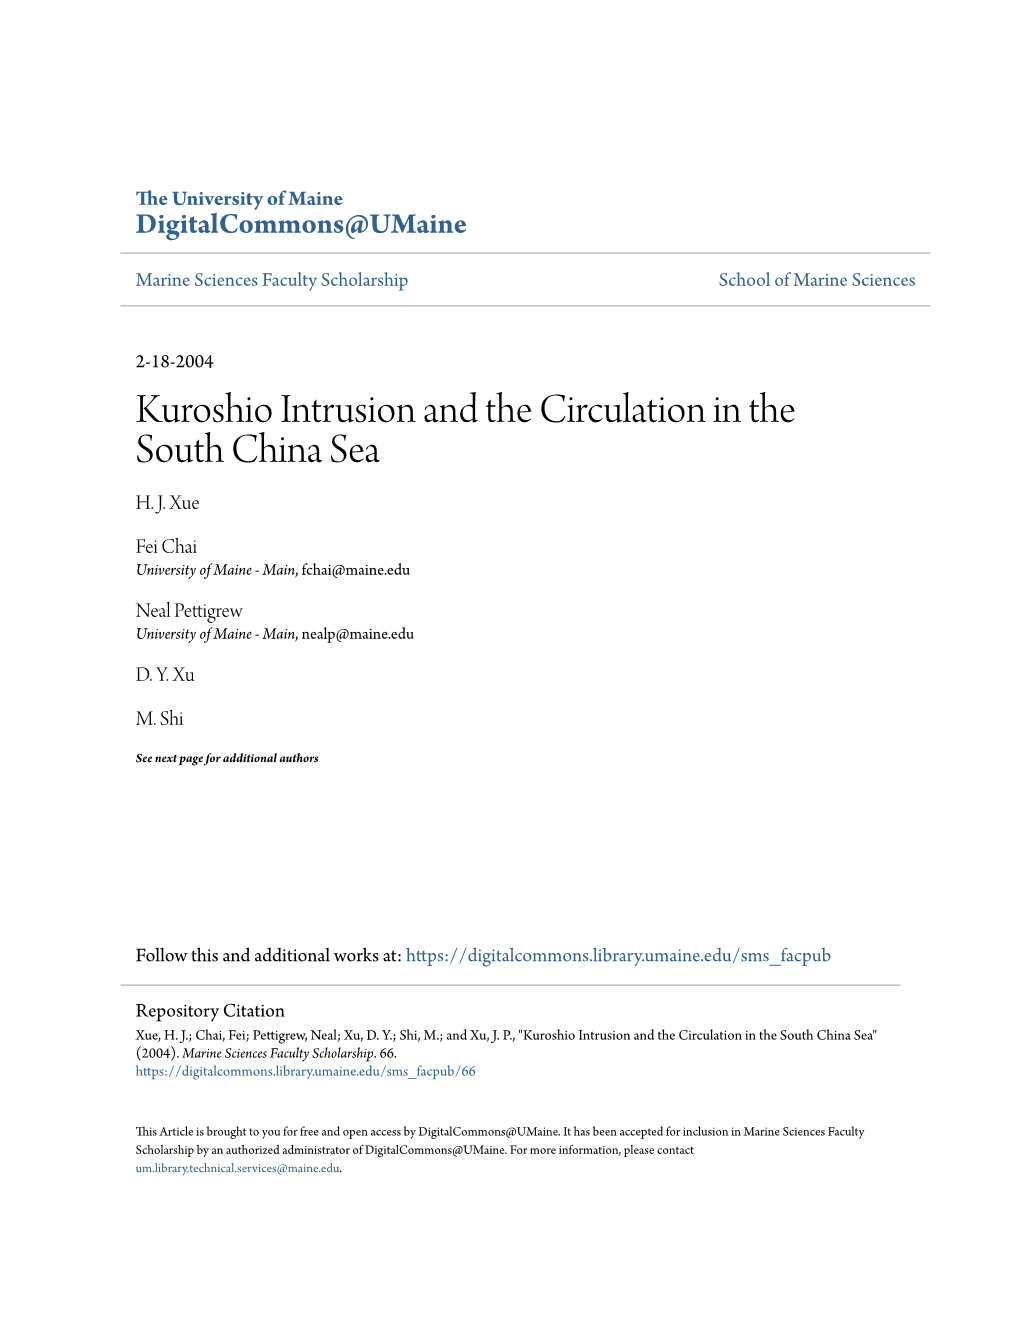 Kuroshio Intrusion and the Circulation in the South China Sea H